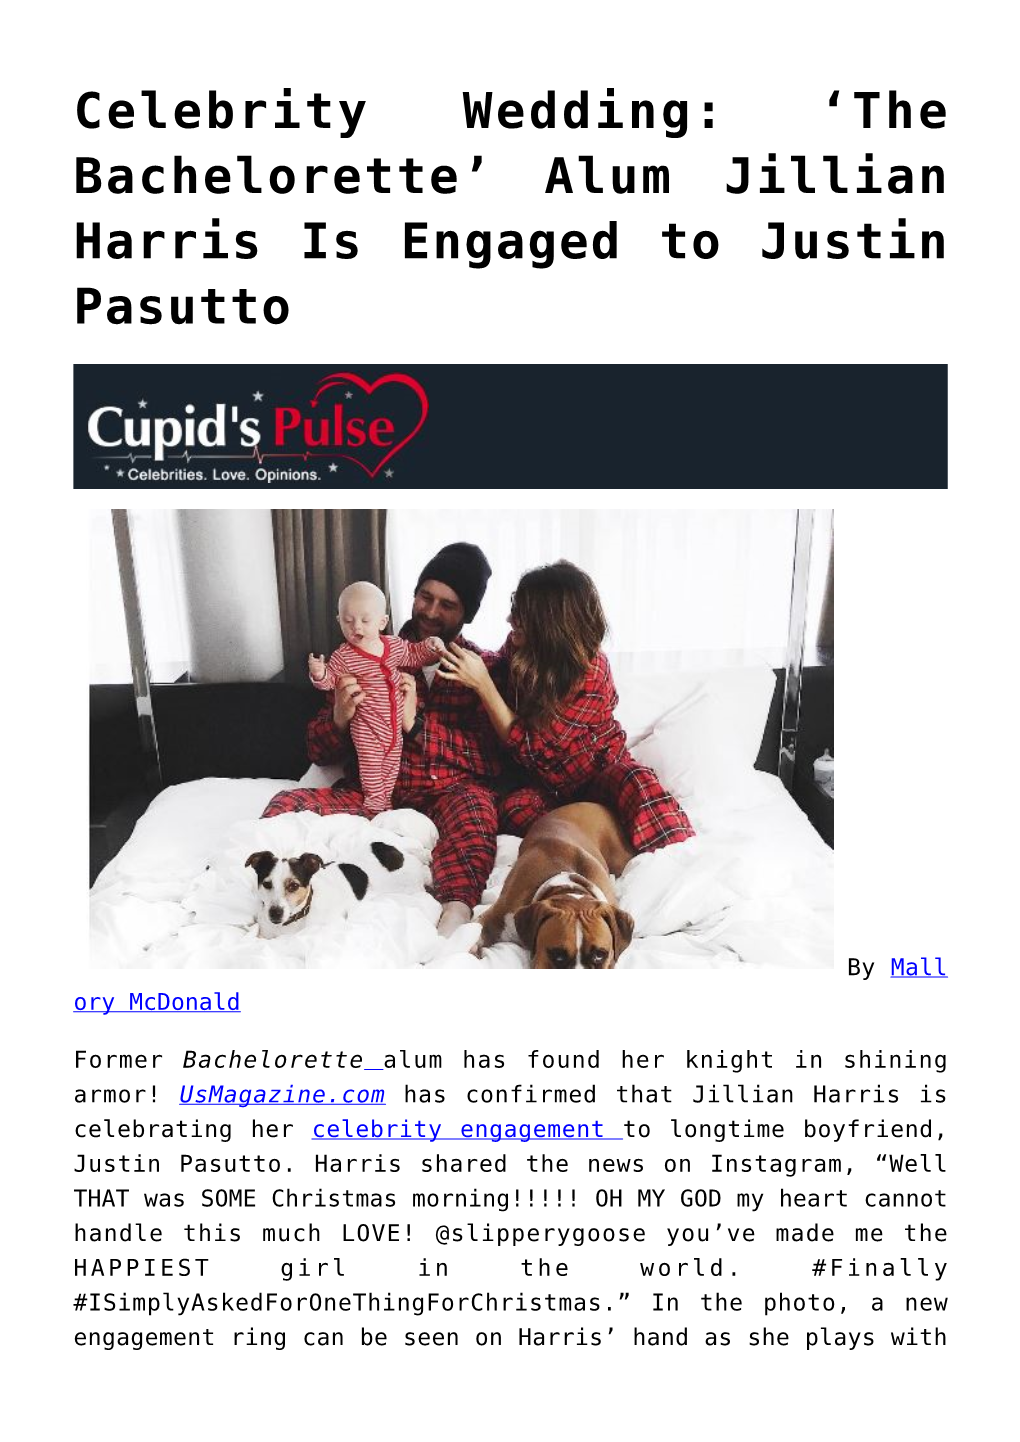 Alum Jillian Harris Is Engaged to Justin Pasutto,&#8216